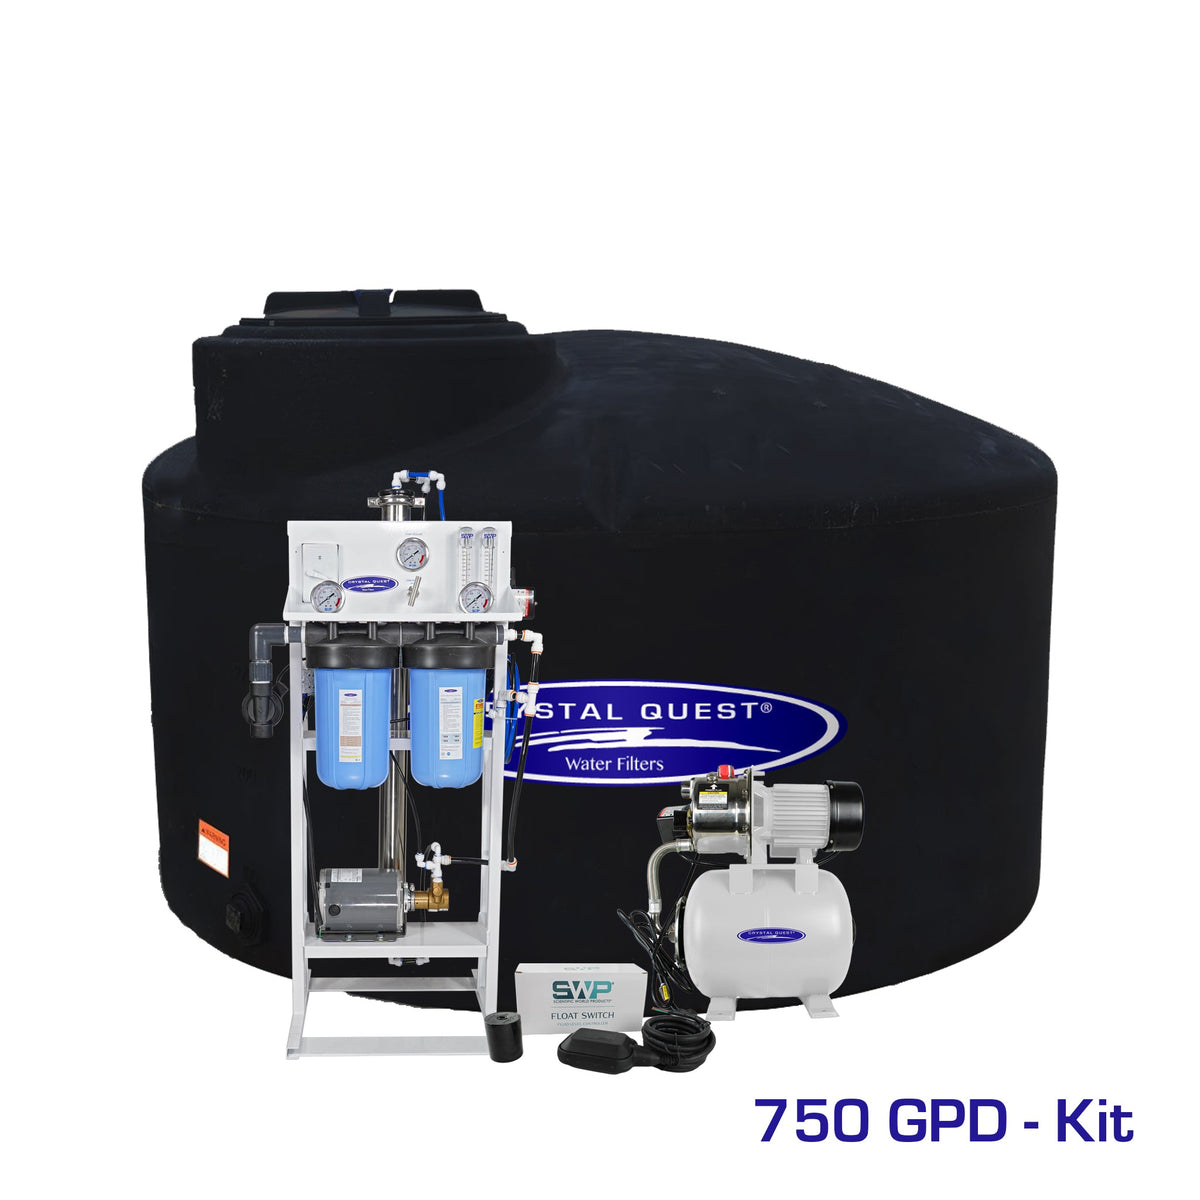 750 GPD / Add Storage Tank Kit (550 Gal) Whole House Reverse Osmosis System - Reverse Osmosis System - Crystal Quest